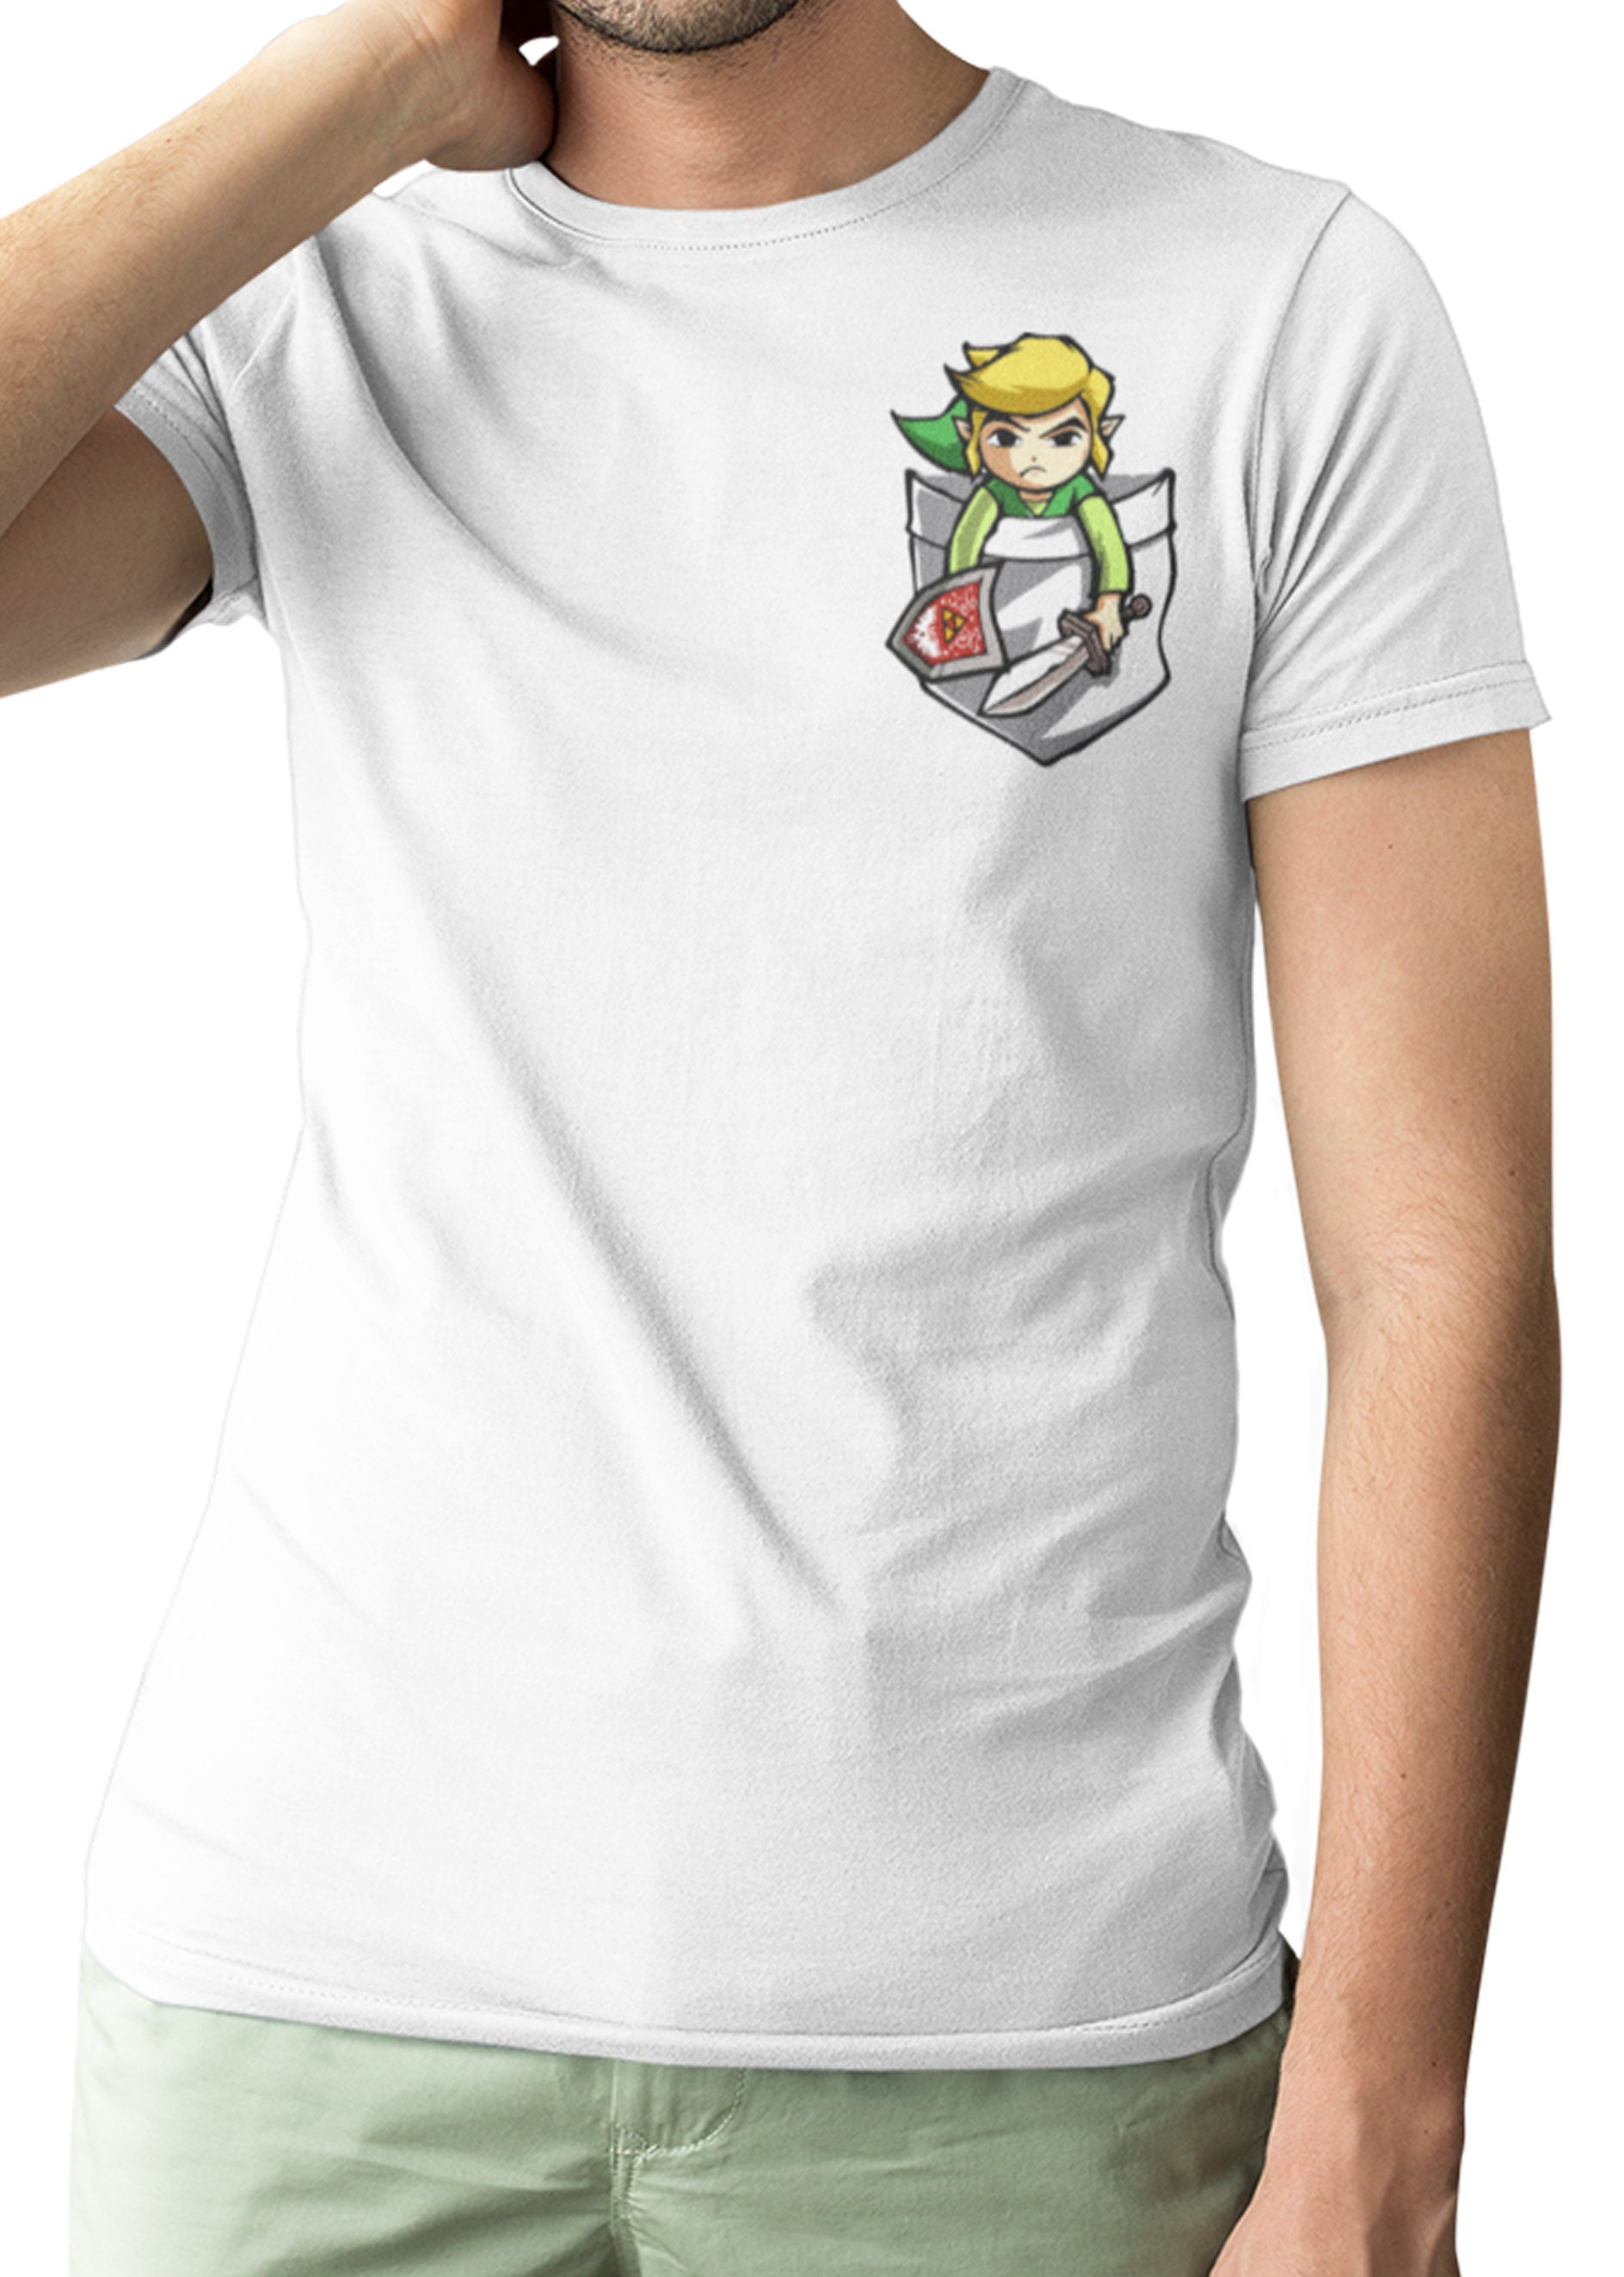 Link Pocket The Legend Inspired Gamer Unisex T-Shirt